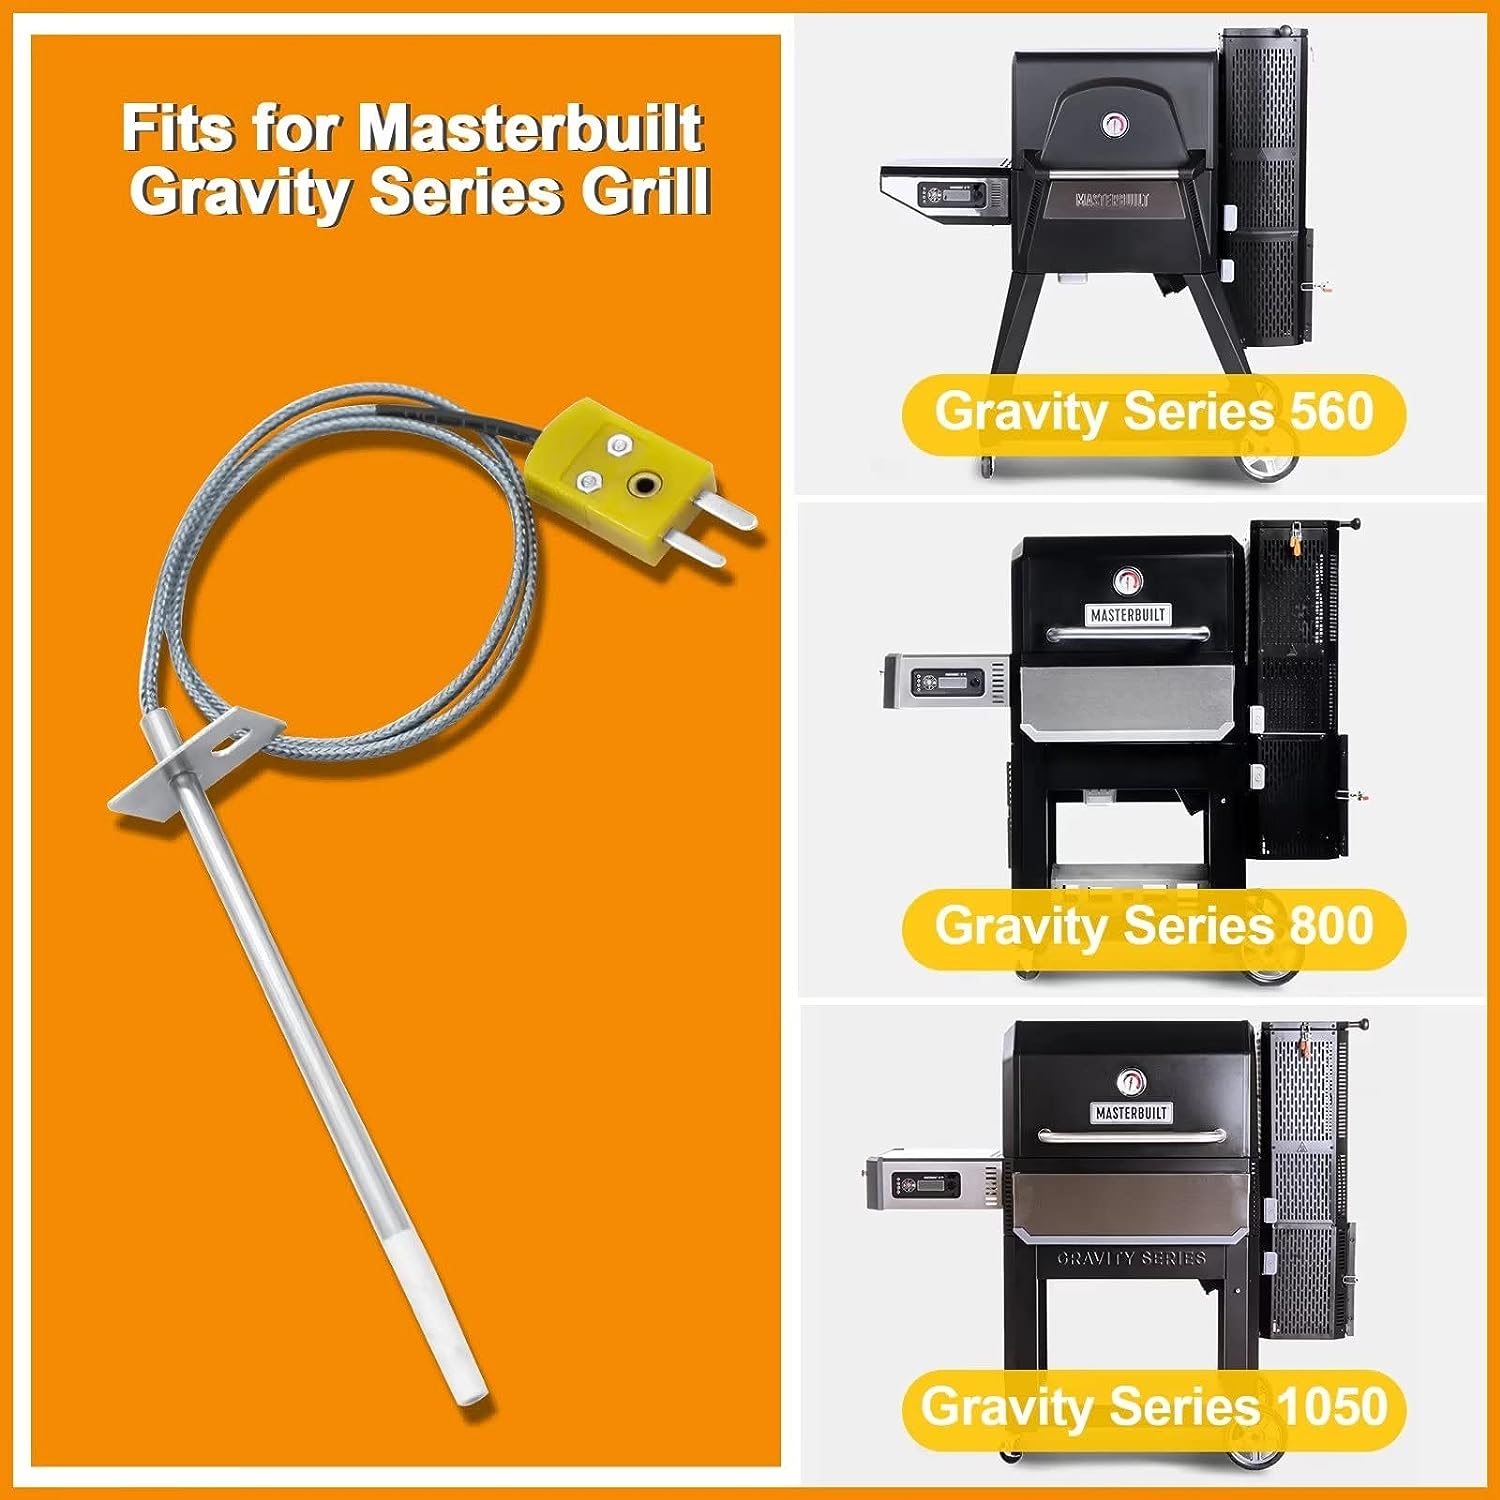 9904190024 Temperature Probe Kit for Masterbuilt Gravity Series 560, 800, 1050 XL Series Digital Charcoal Smoker Grills